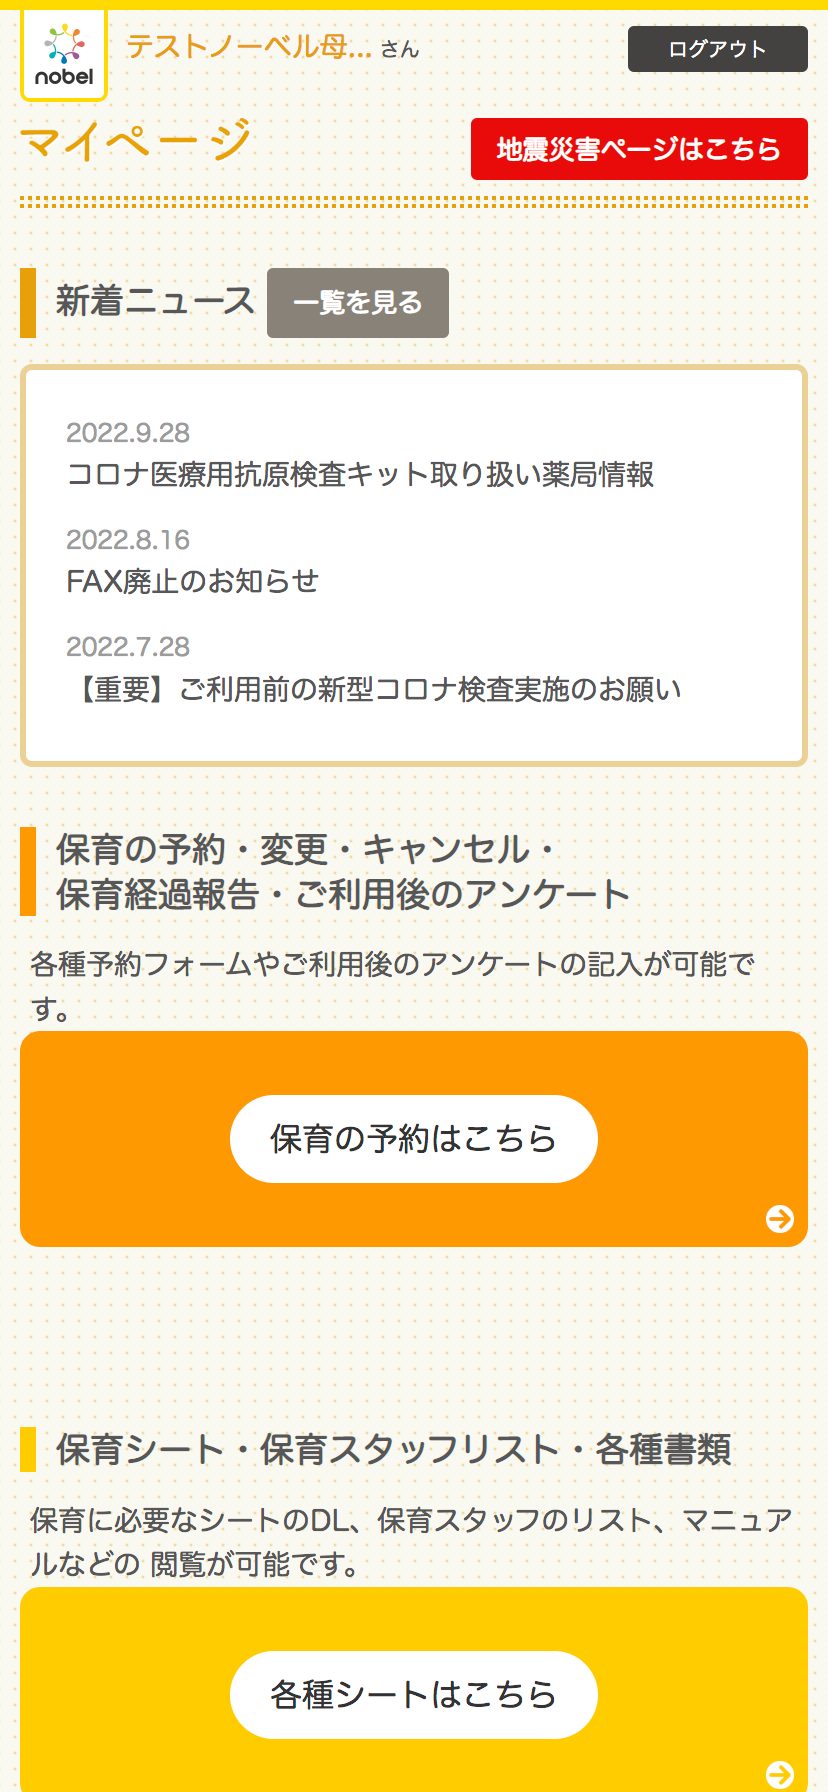 byojihoiku.nponobel.jp_mypage_(iPhone XR)